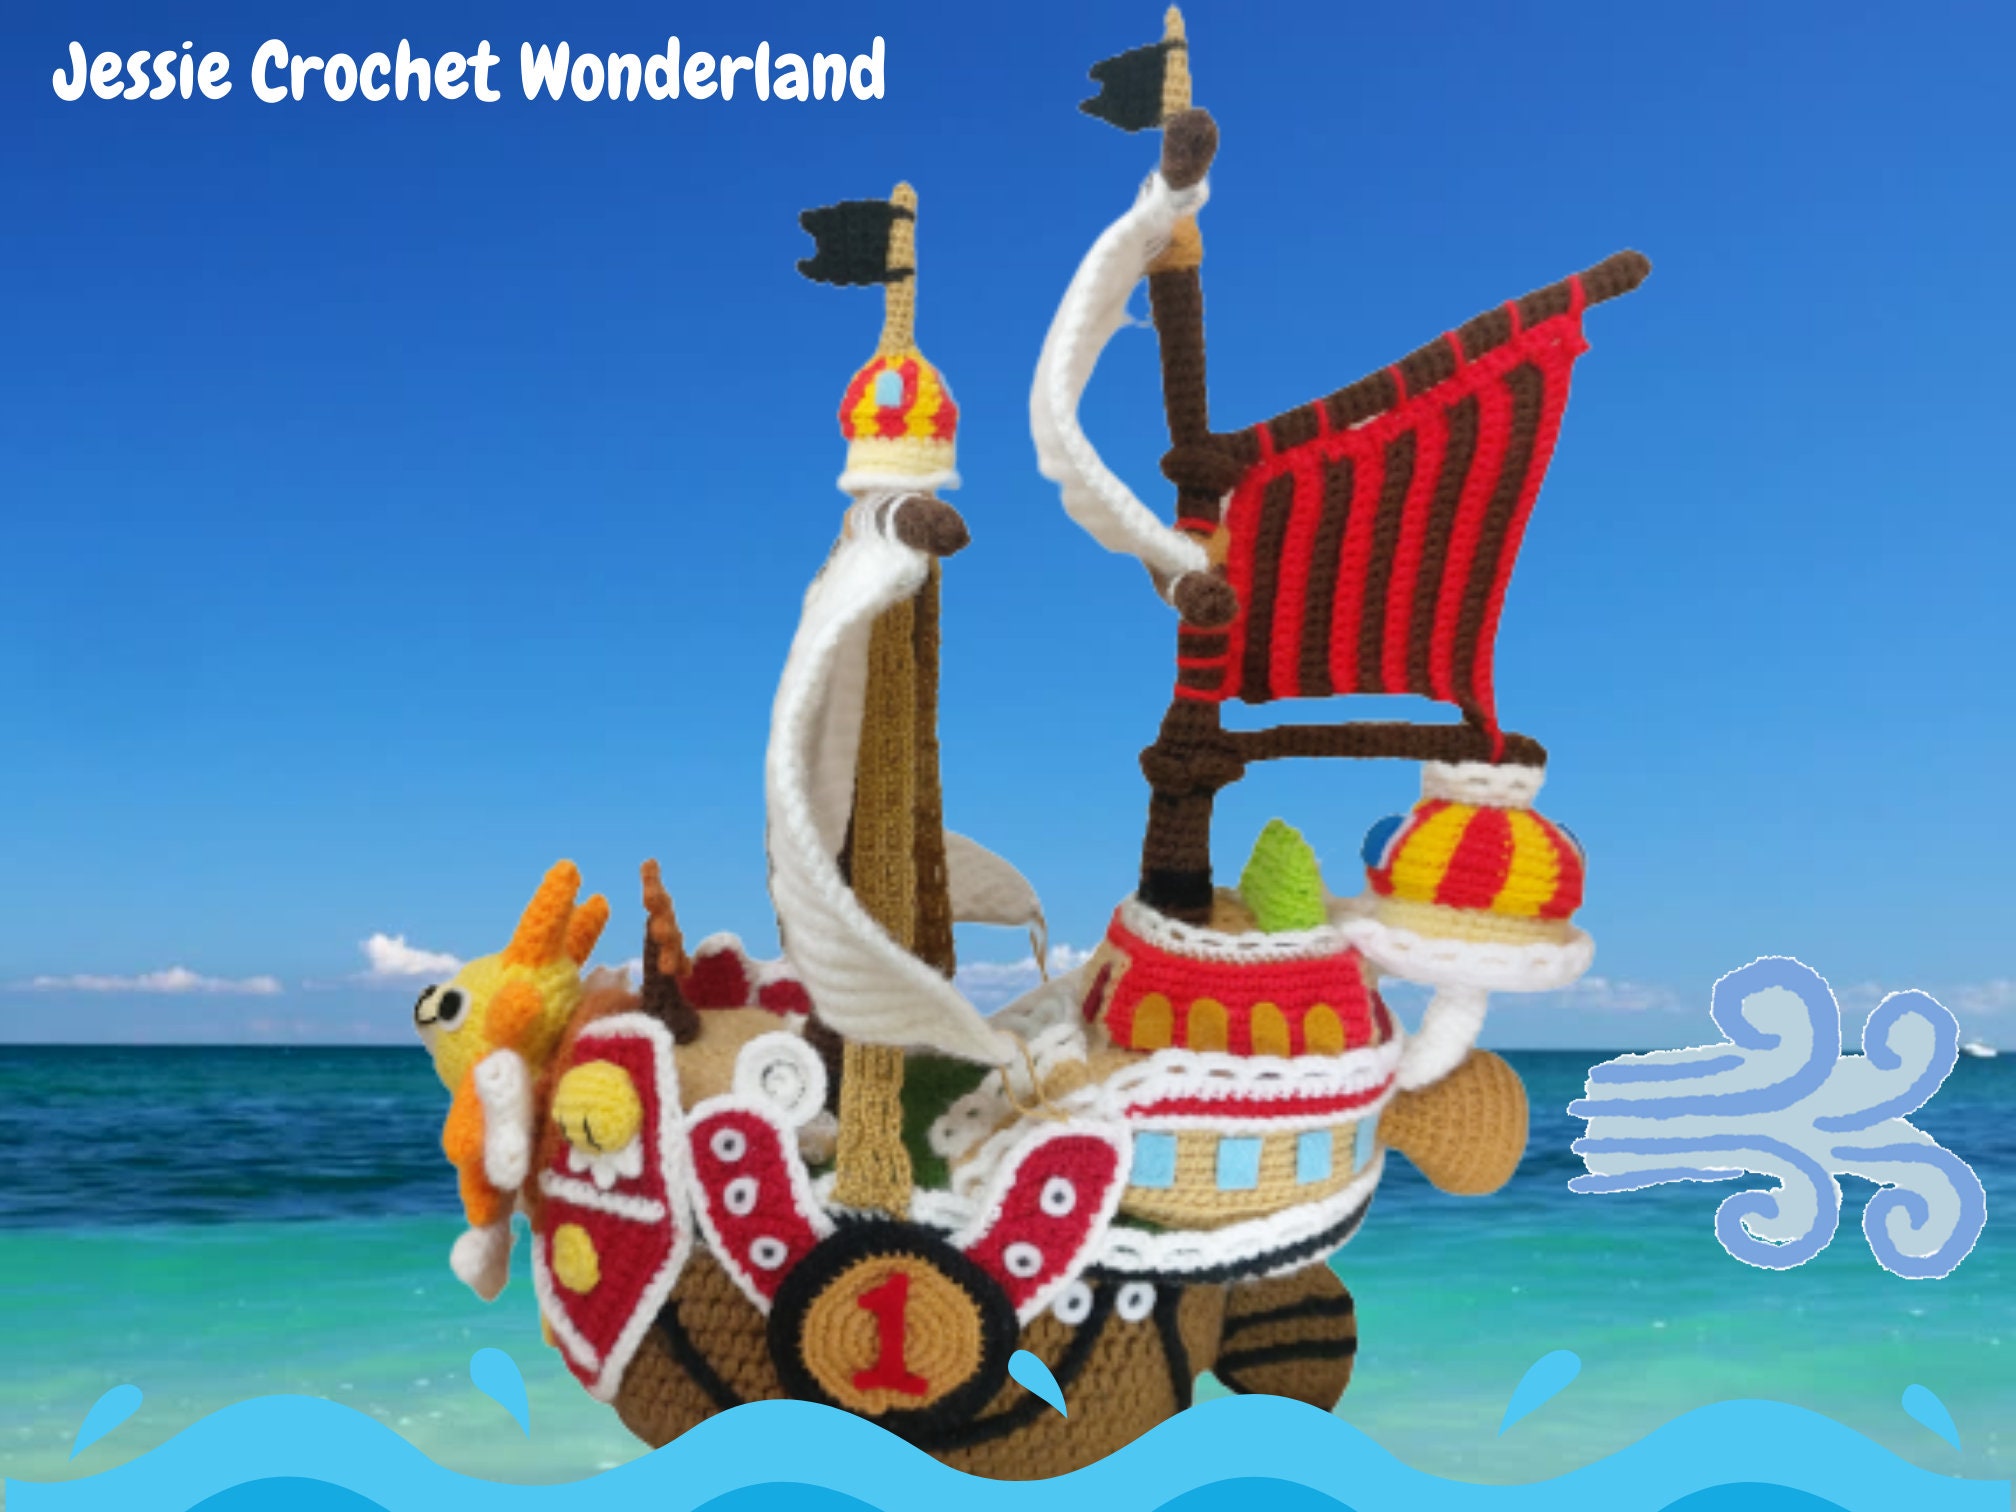 One Piece Action Figures - Floating Merry Thousand Sunny Barco Fluid Drift  3D Ship Bottle